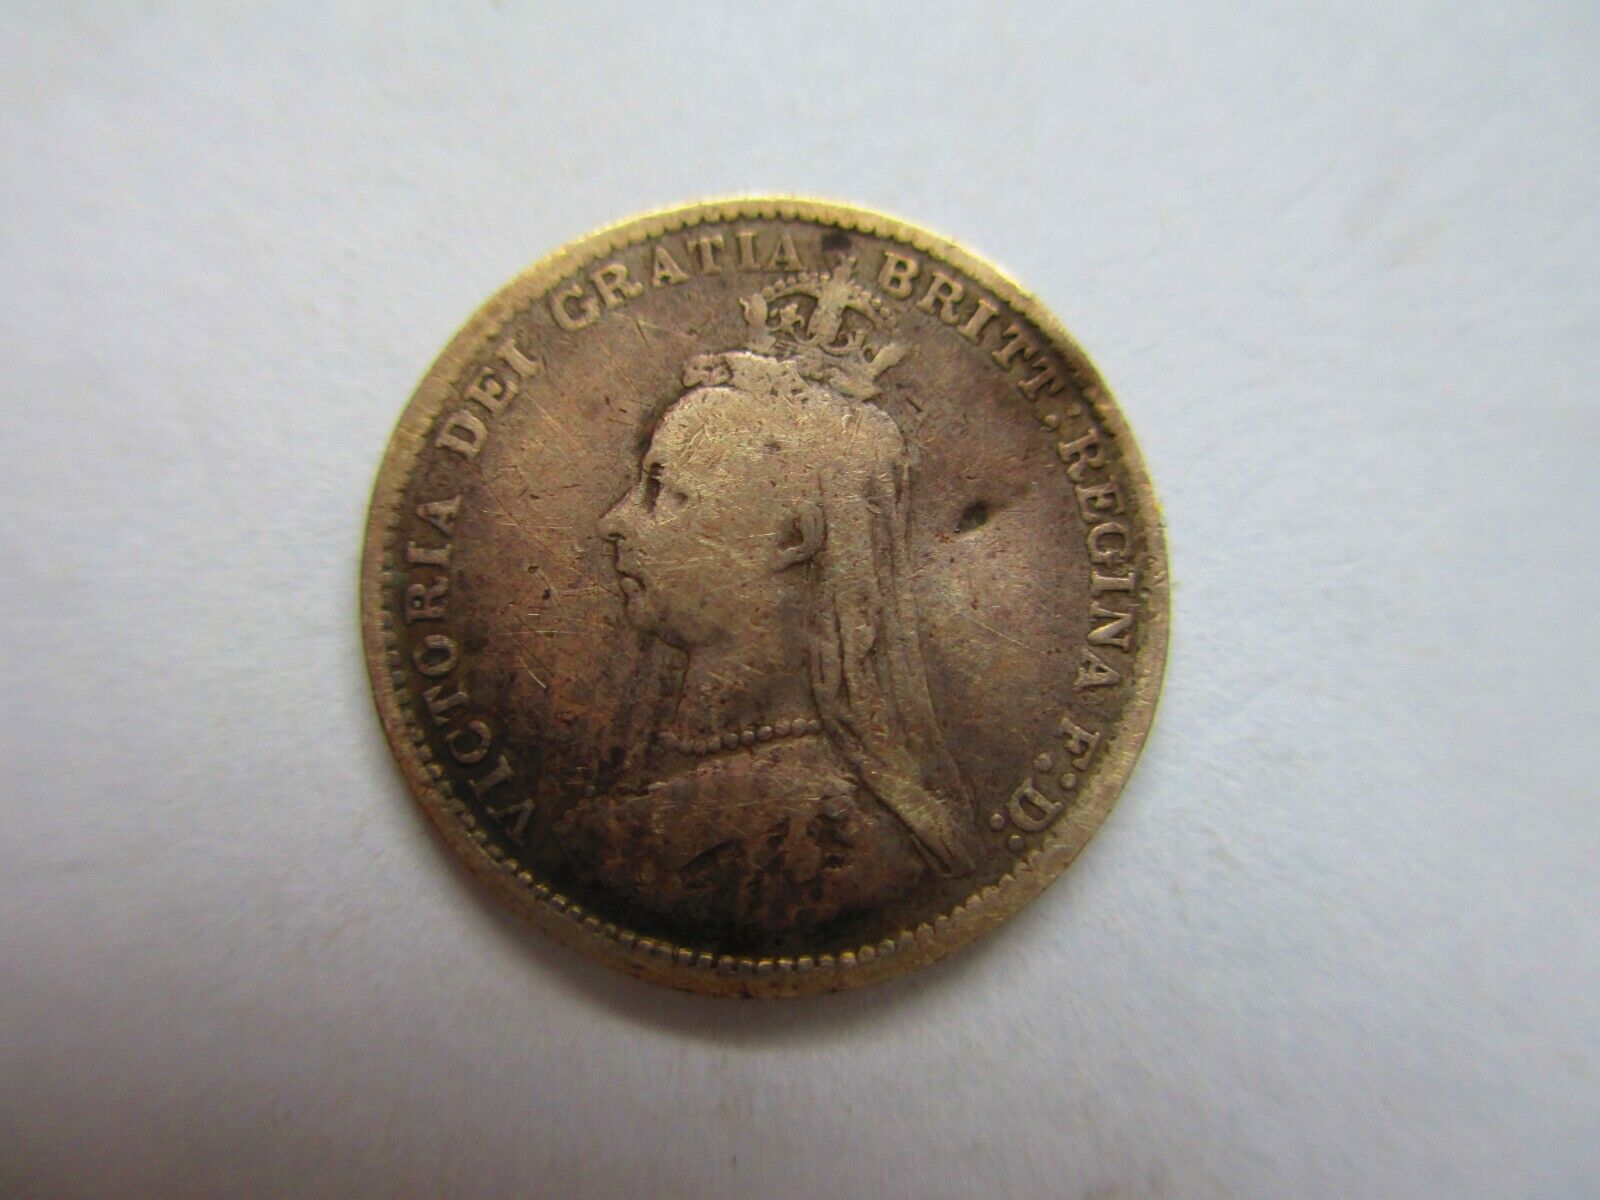 1889 KM 758 Great Britain 3 pence